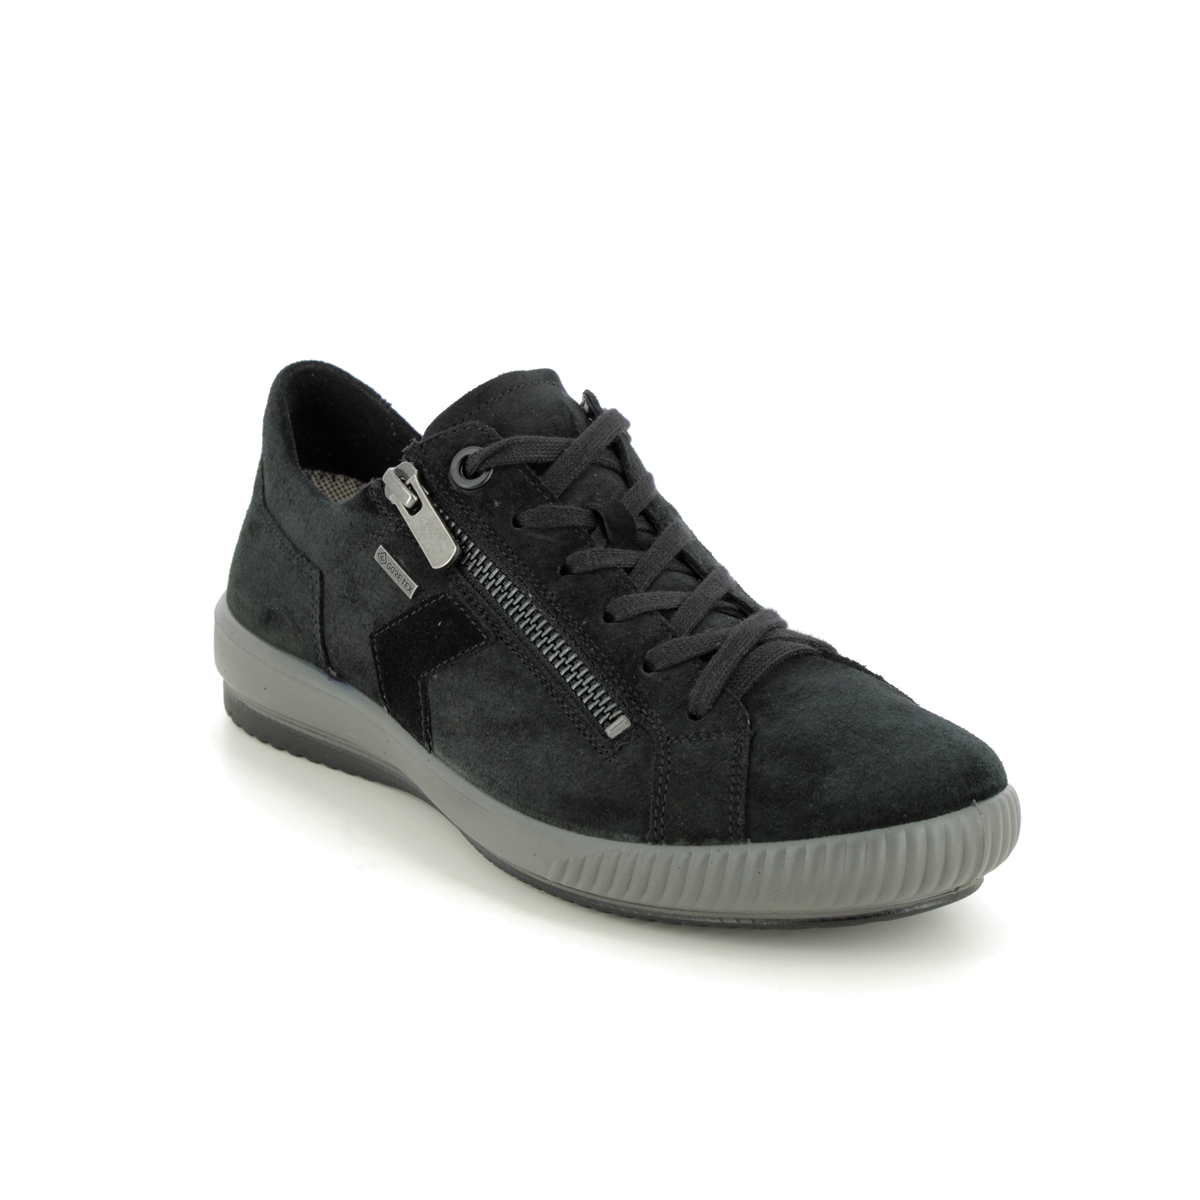 Legero Tanaro5 Zip Gtx Black Suede Womens Lacing Shoes 2000163-0000 In Size 9 In Plain Black Suede